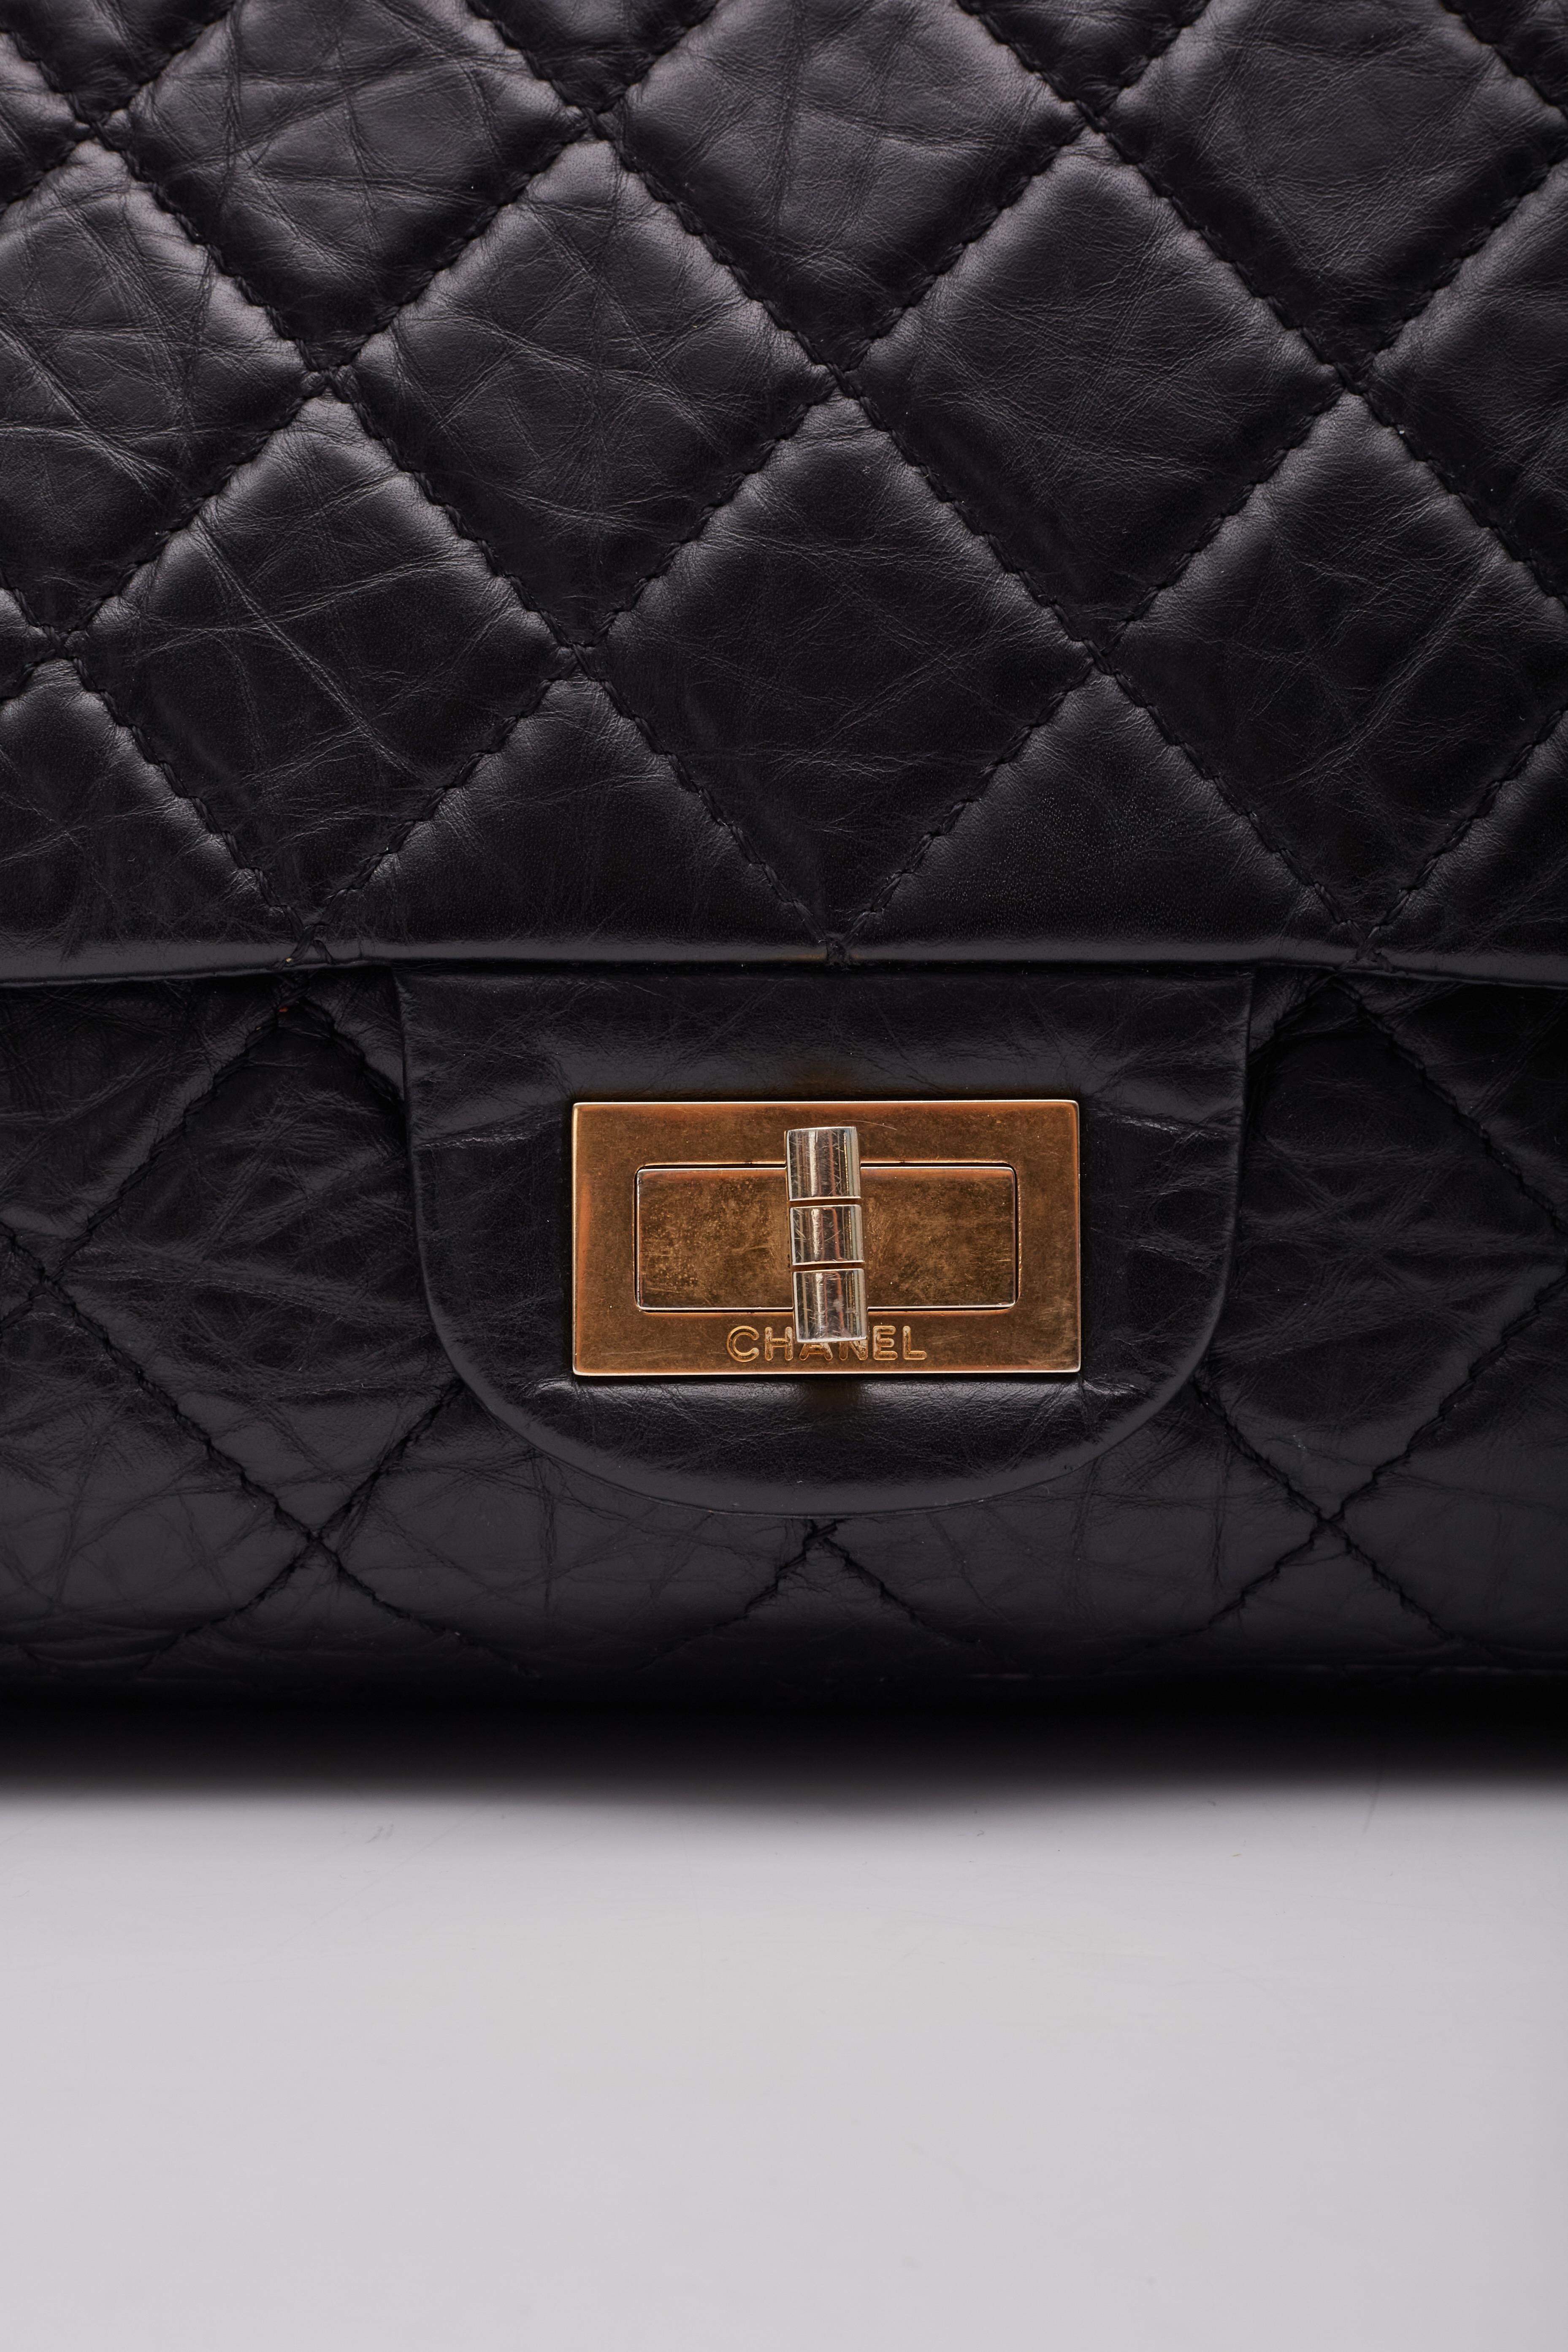 Chanel Calfskin Black Reissue 2.55 227 Flap Bag For Sale 2